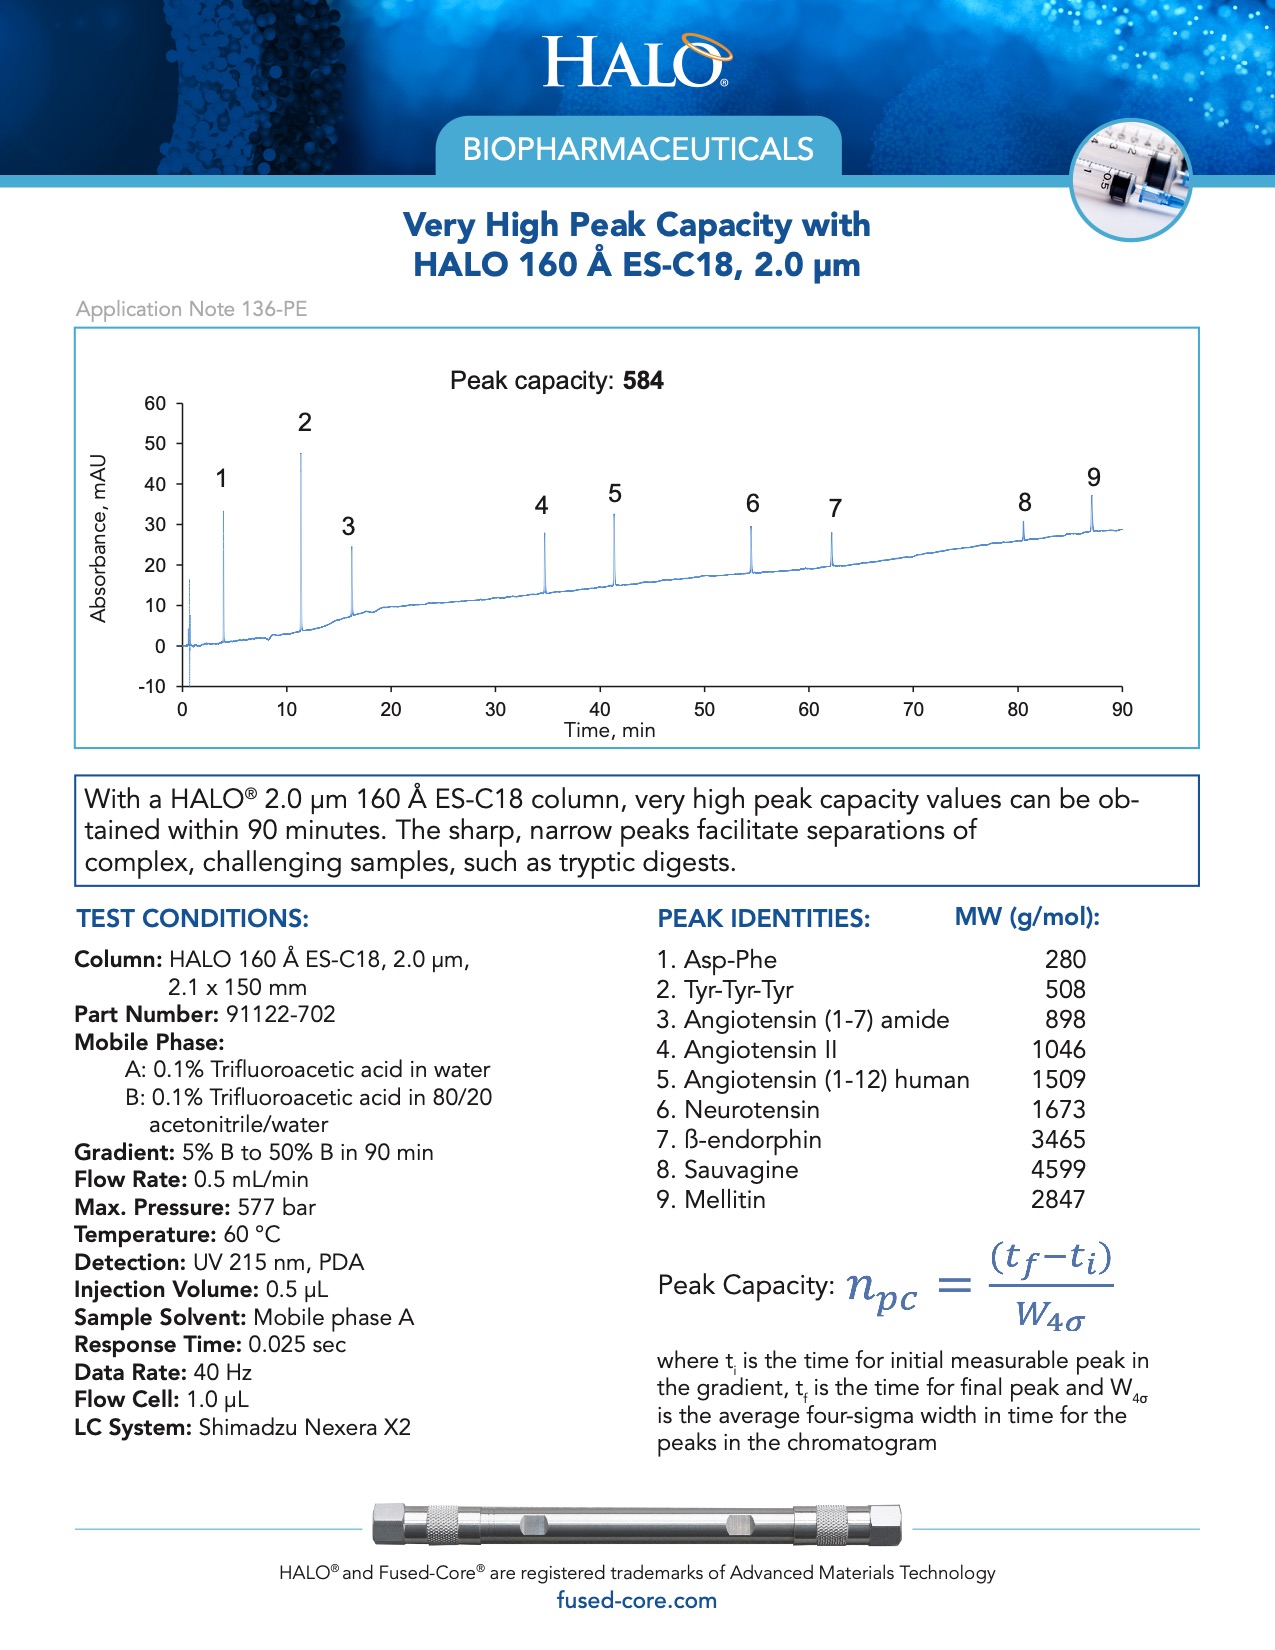 high peak capacity with halo 160 column - biopharmaceutical analysis